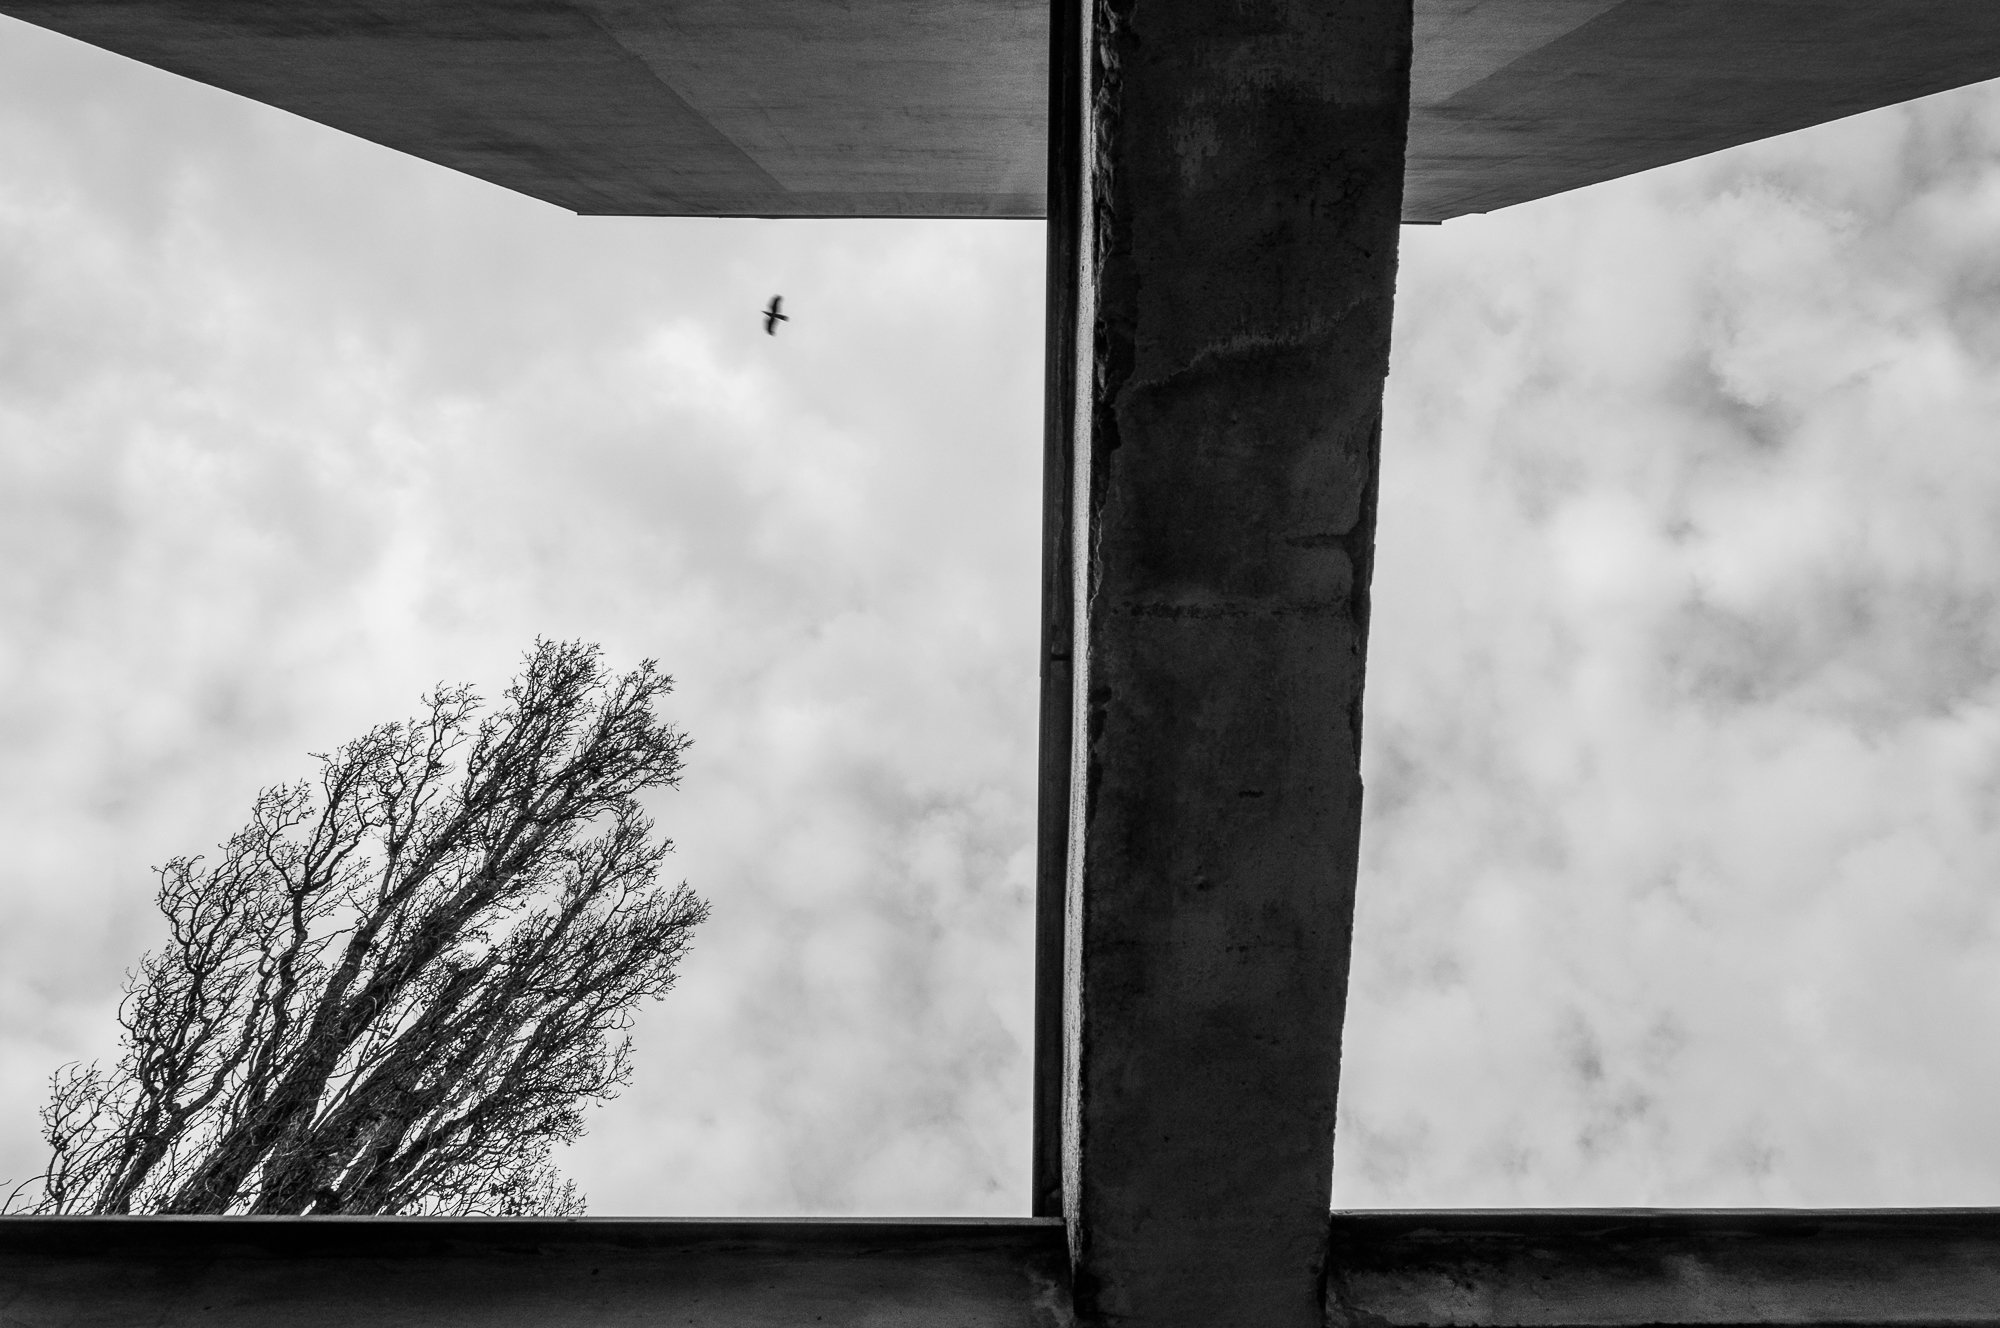 Adam Mazek Photography Warsaw (Warszawa) 2019. Post: "Beksinski's paintings." Minimalism. Perspective.